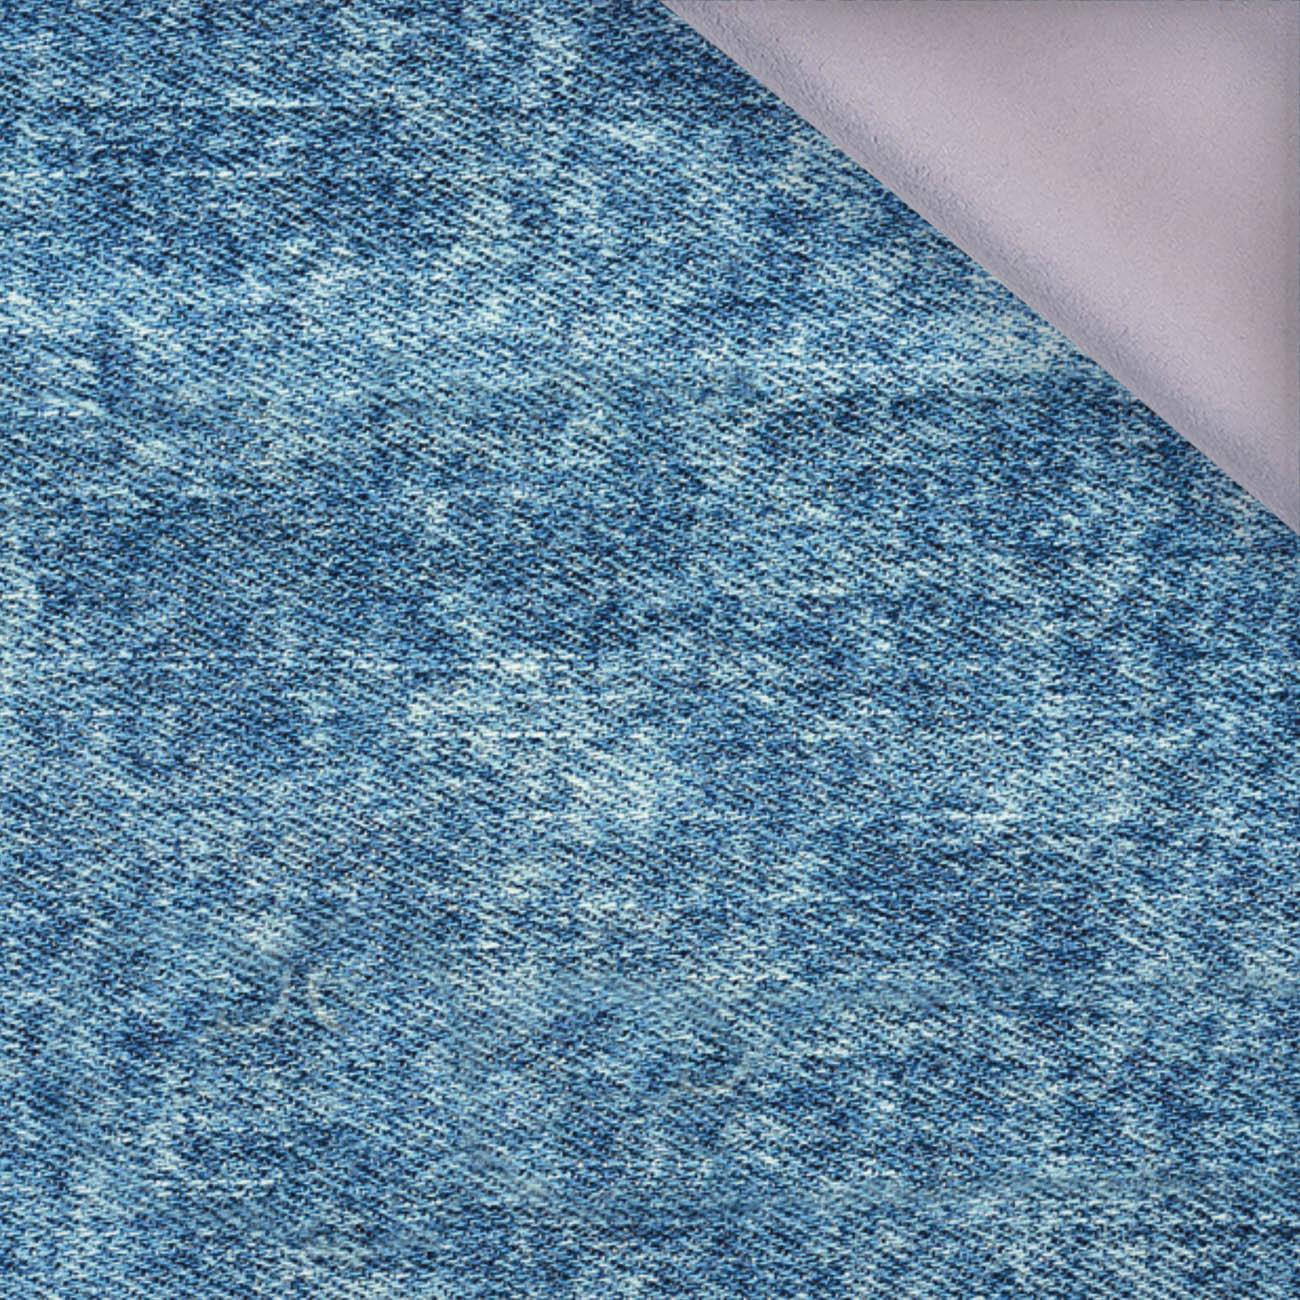 PRZECIERANY JEANS (Atlantic Blue) - softshell